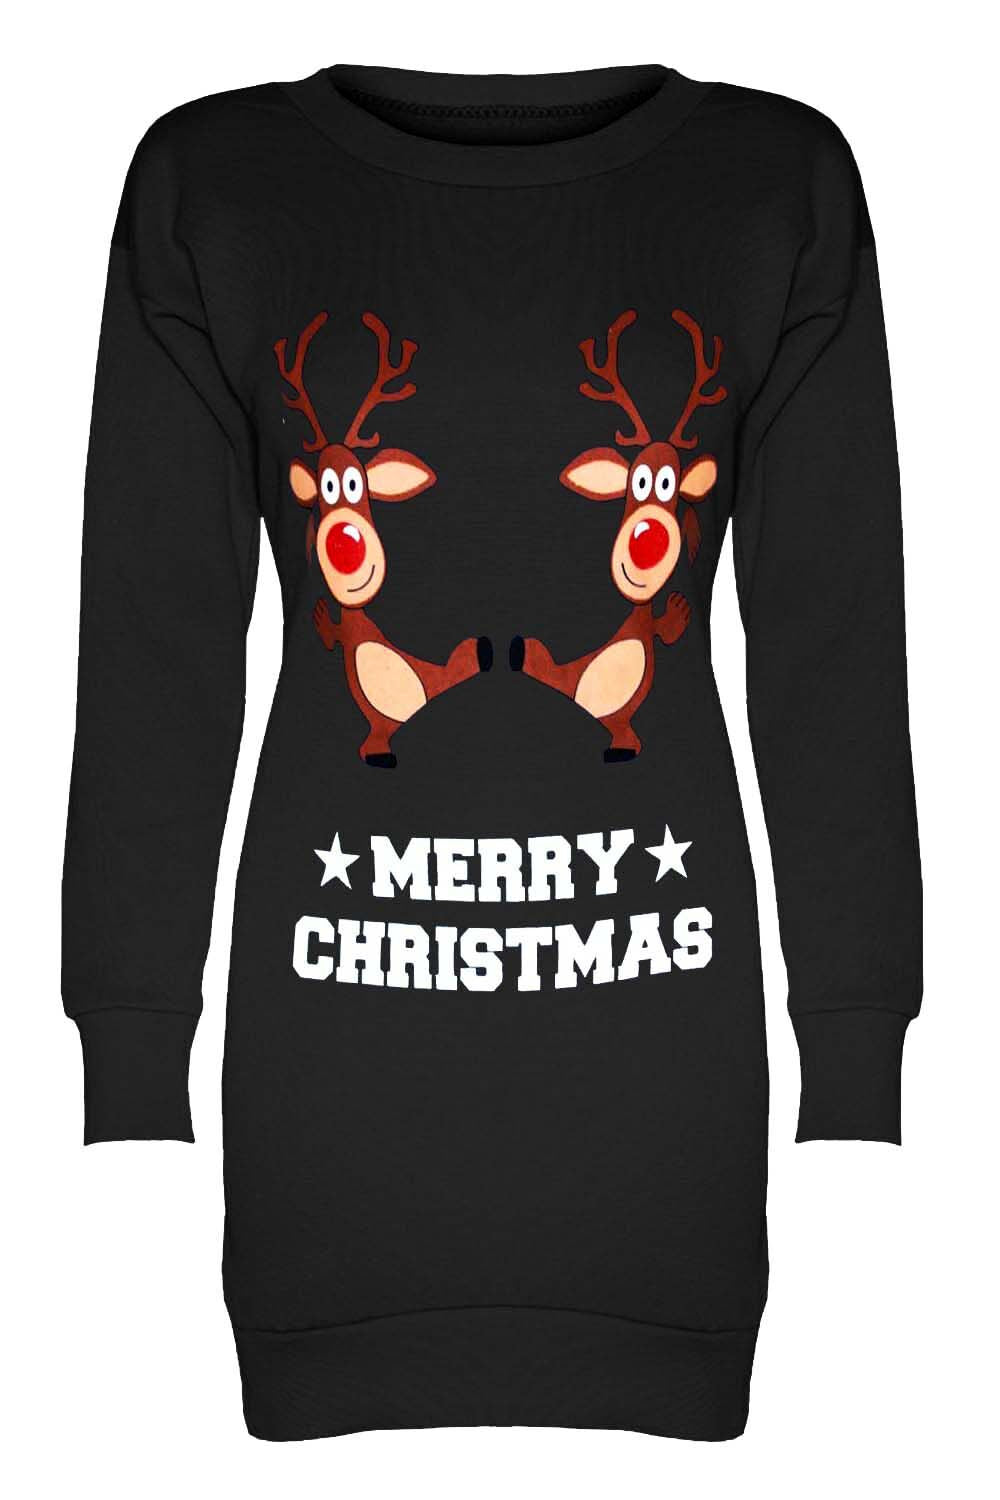 Merry Christmas Reindeer Print Red Jumper - bejealous-com